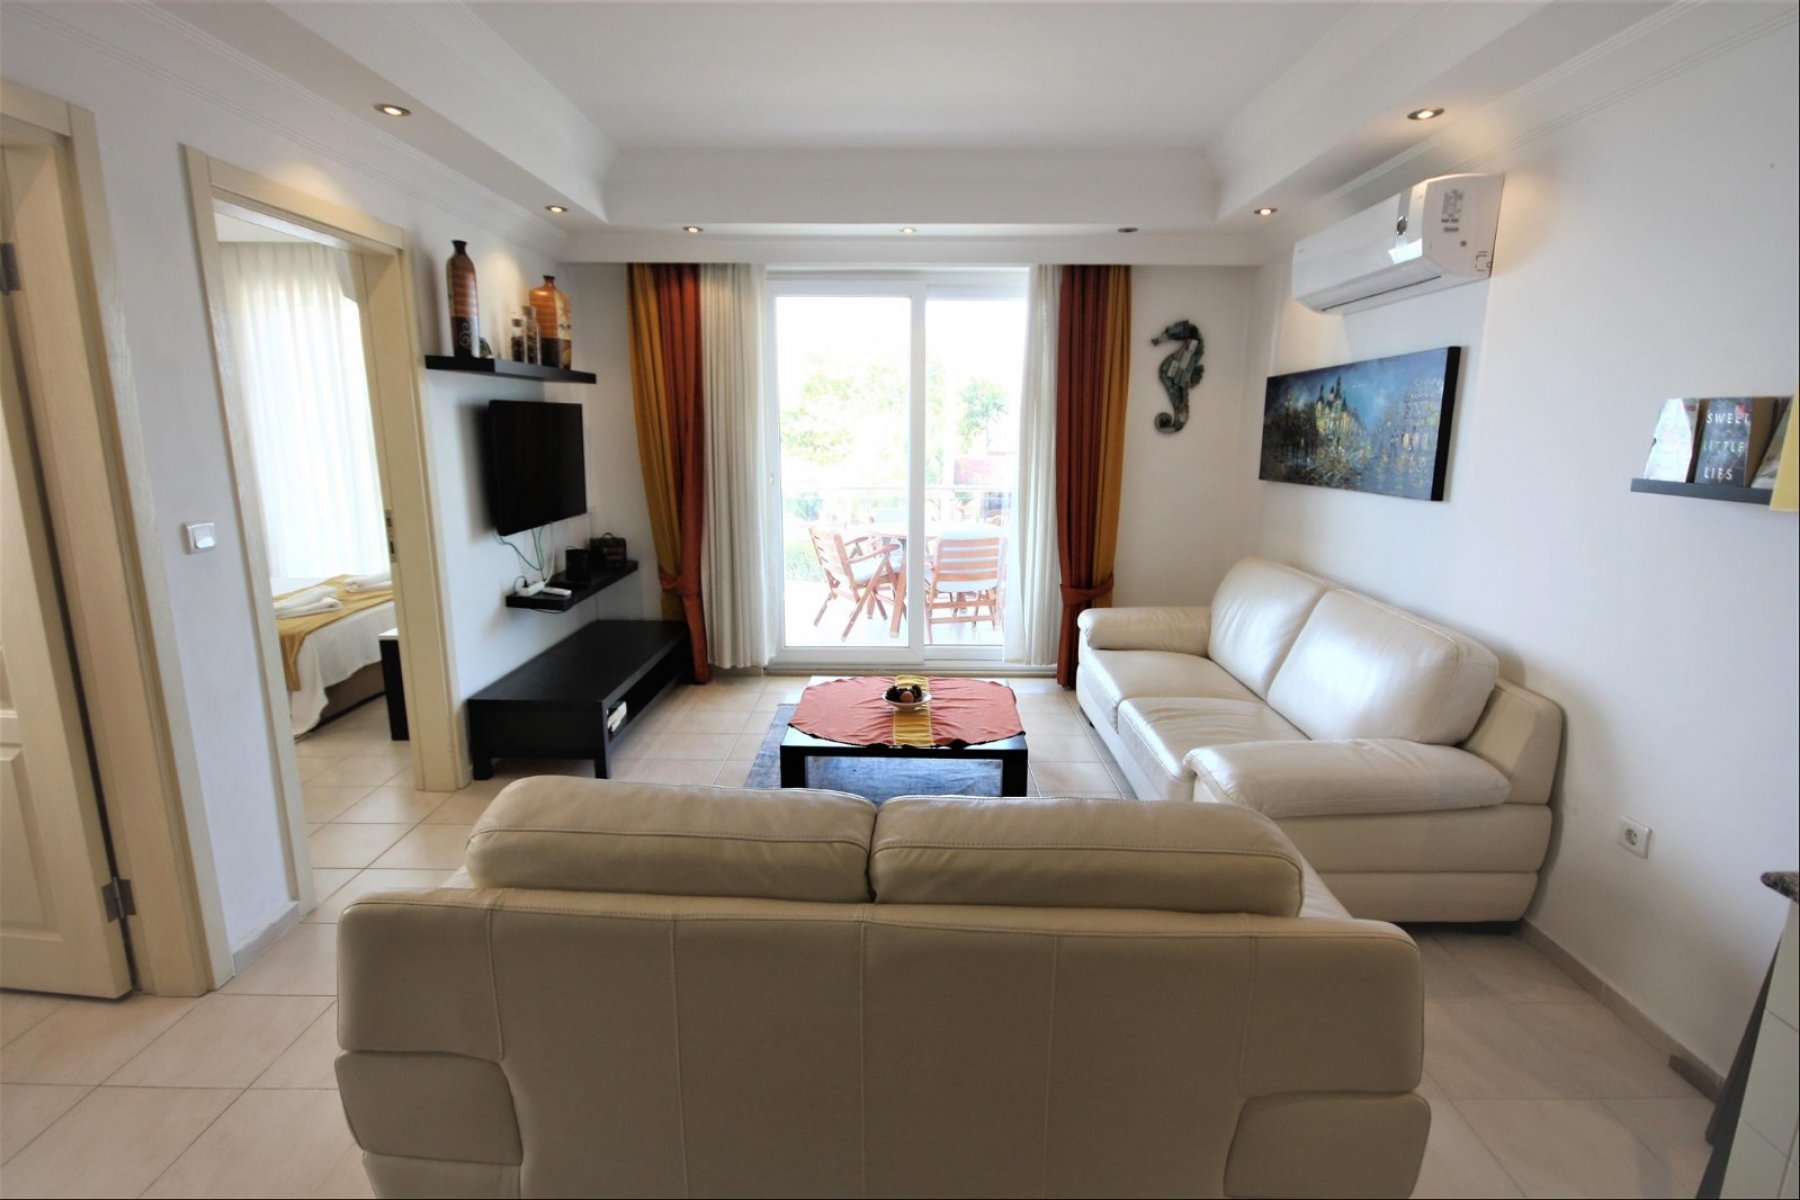  CLA307 Legend apartments apartment for rent in Calis